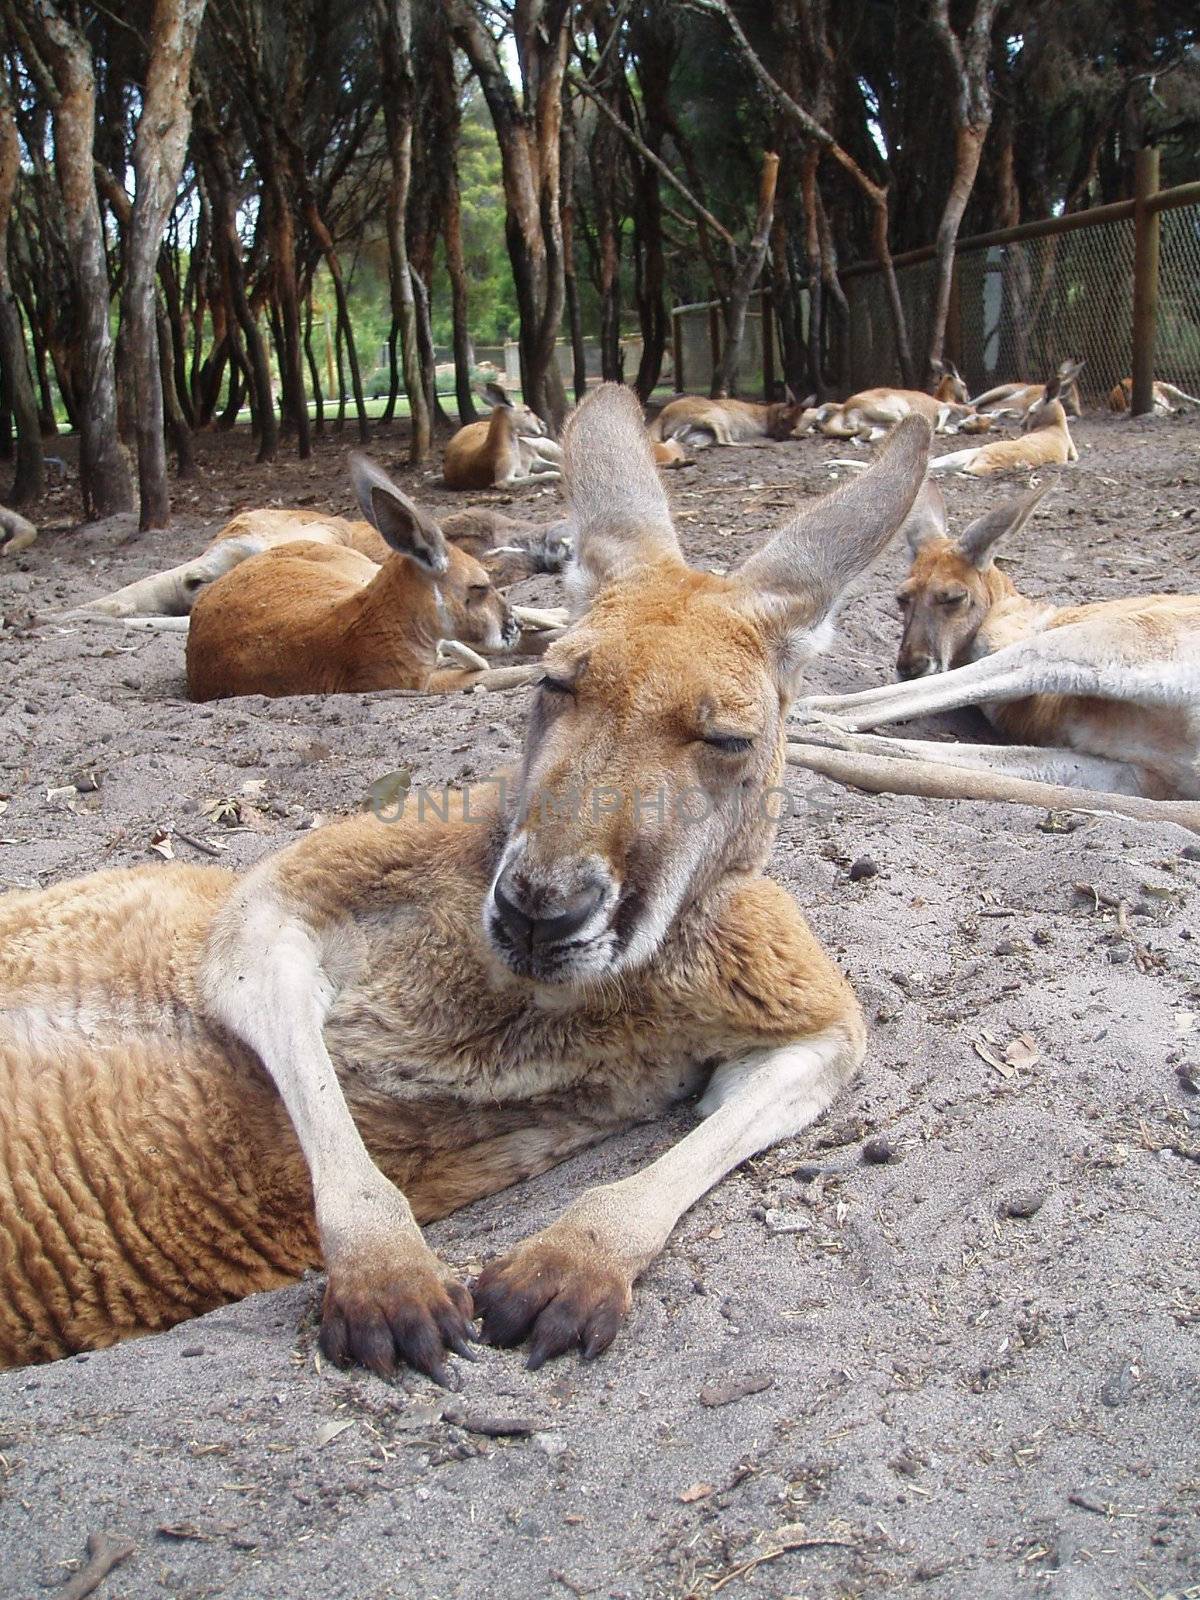 Relaxed Kangaroo by monirha